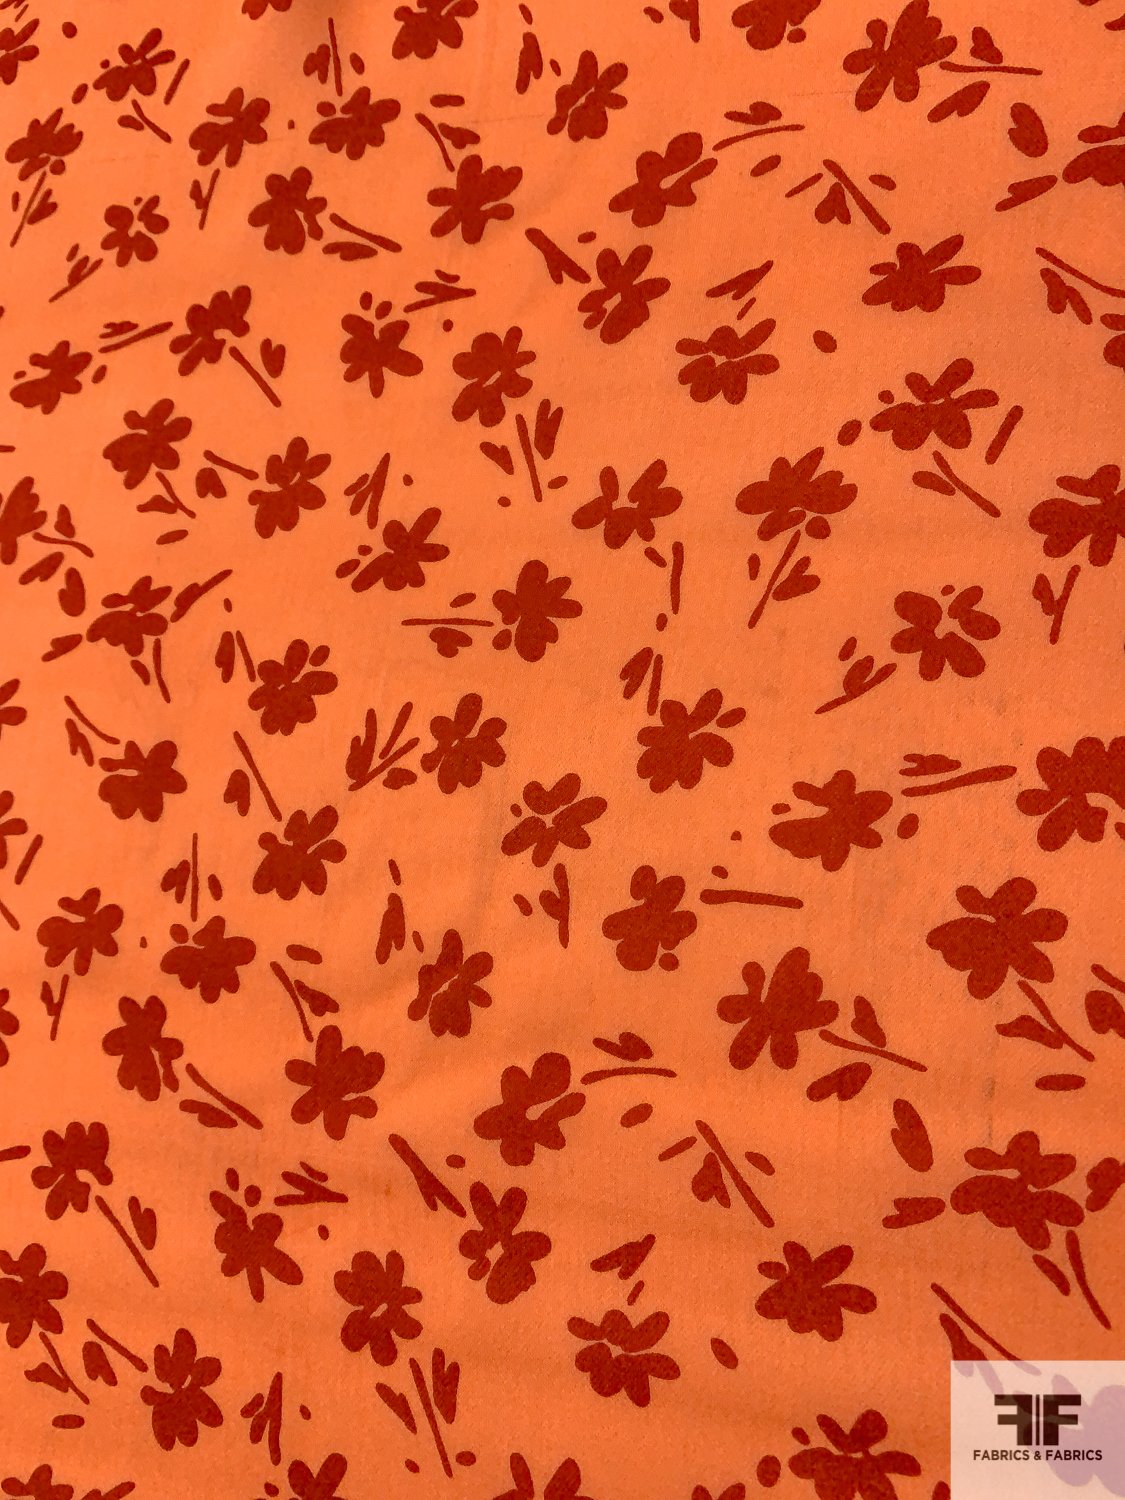 Youthful Floral Silhouette Printed Silk Georgette - Coral / Burnt Brick Orange